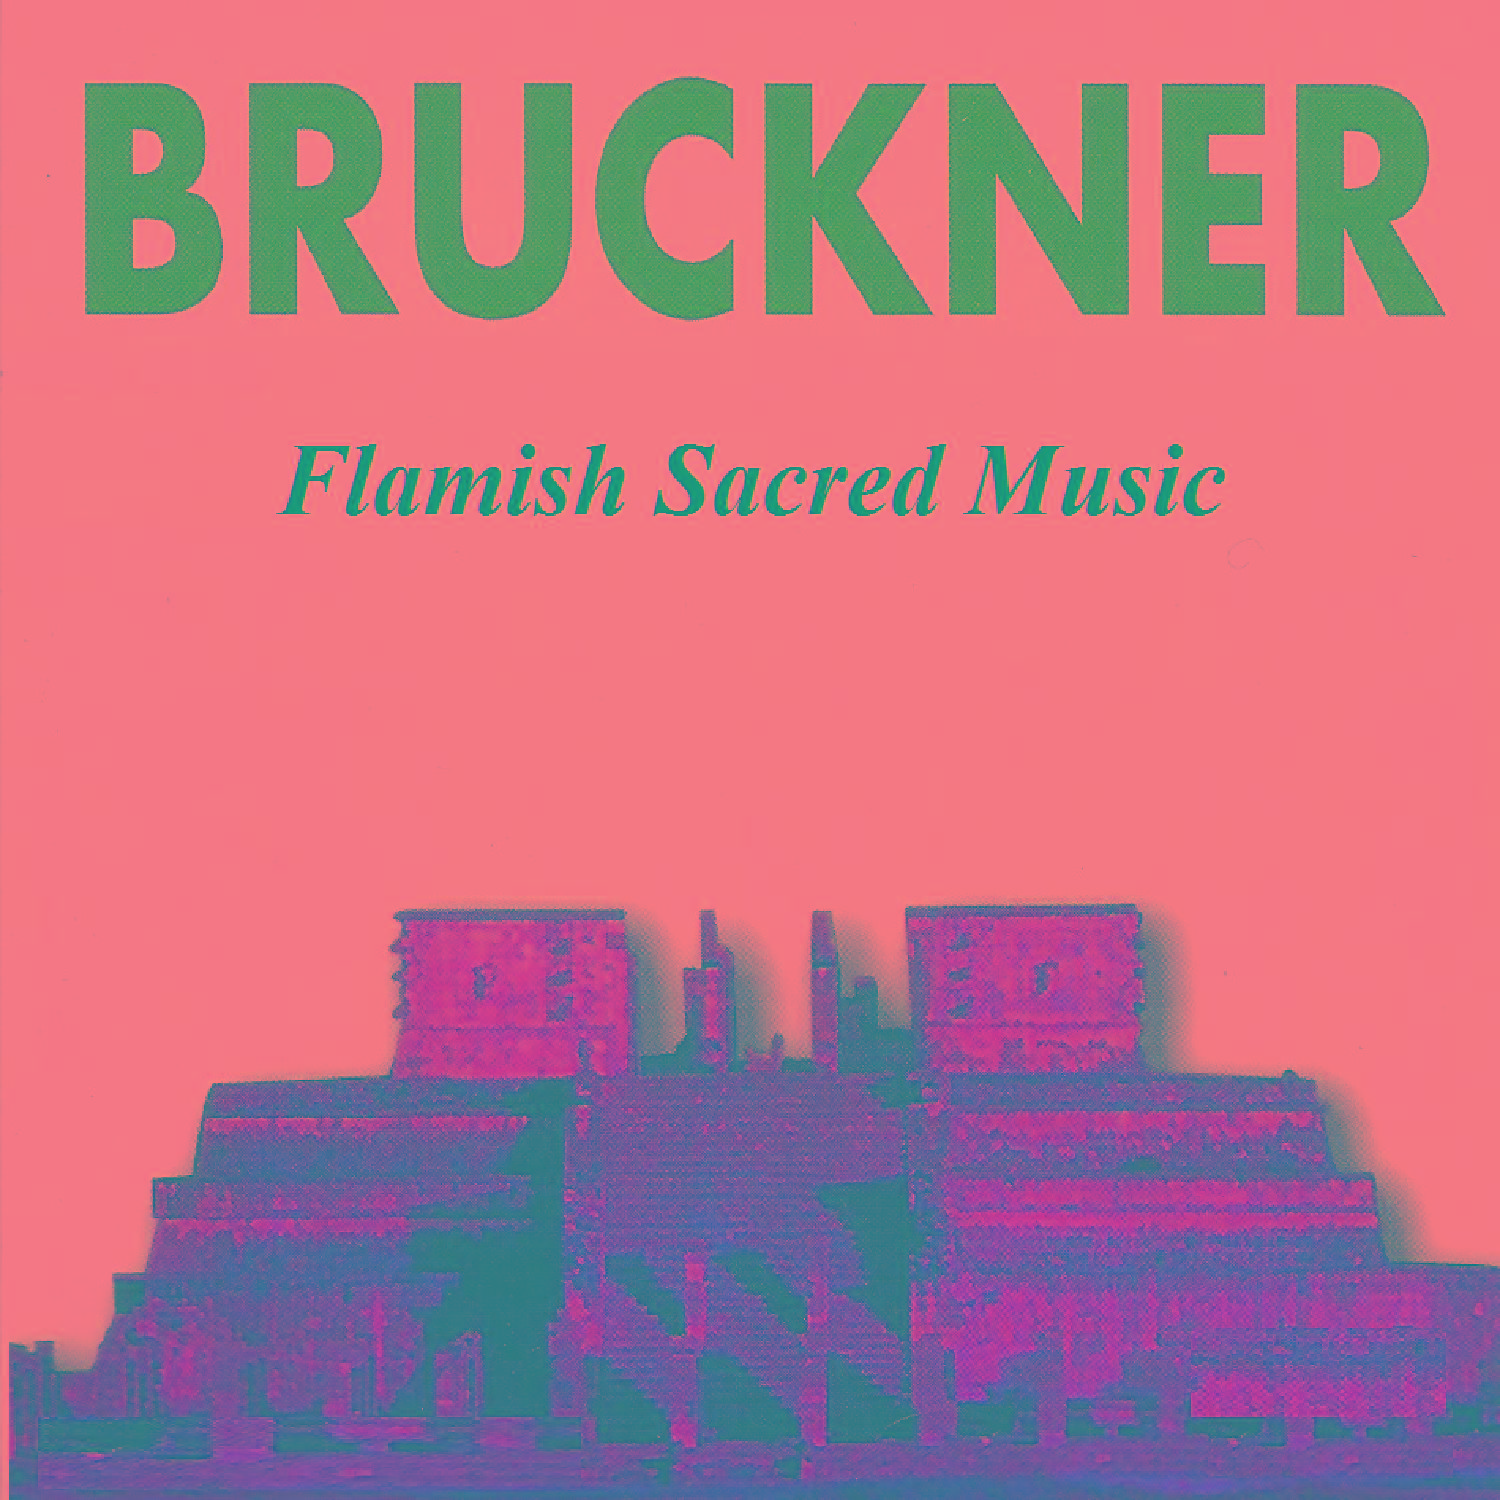 Bruckner - Flamish Sacred Music